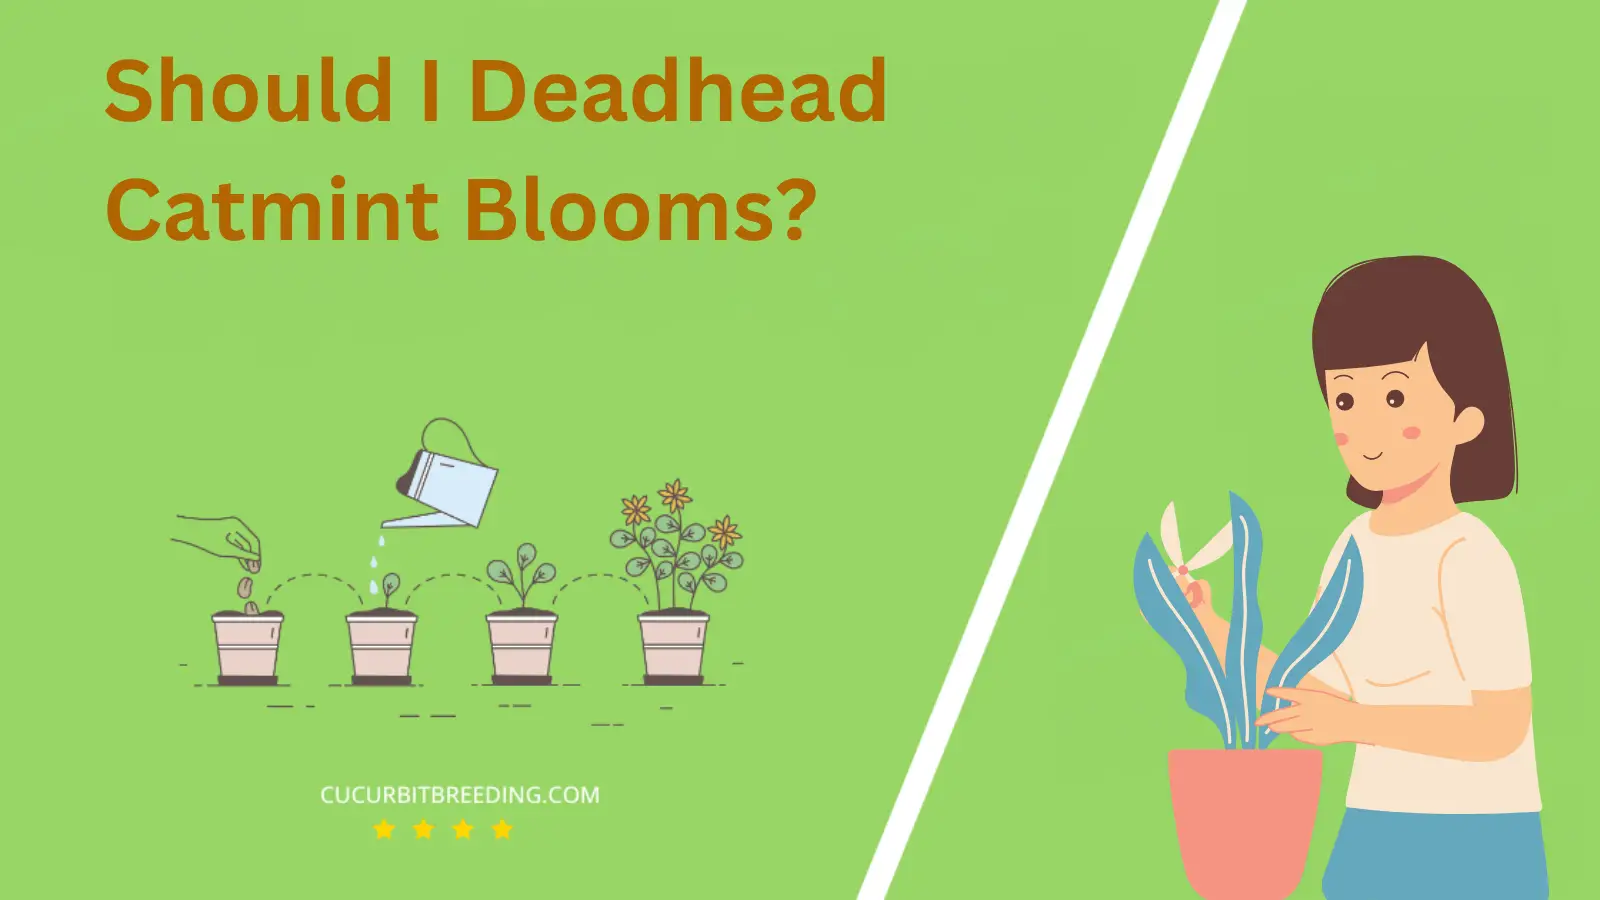 Should I Deadhead Catmint Blooms?